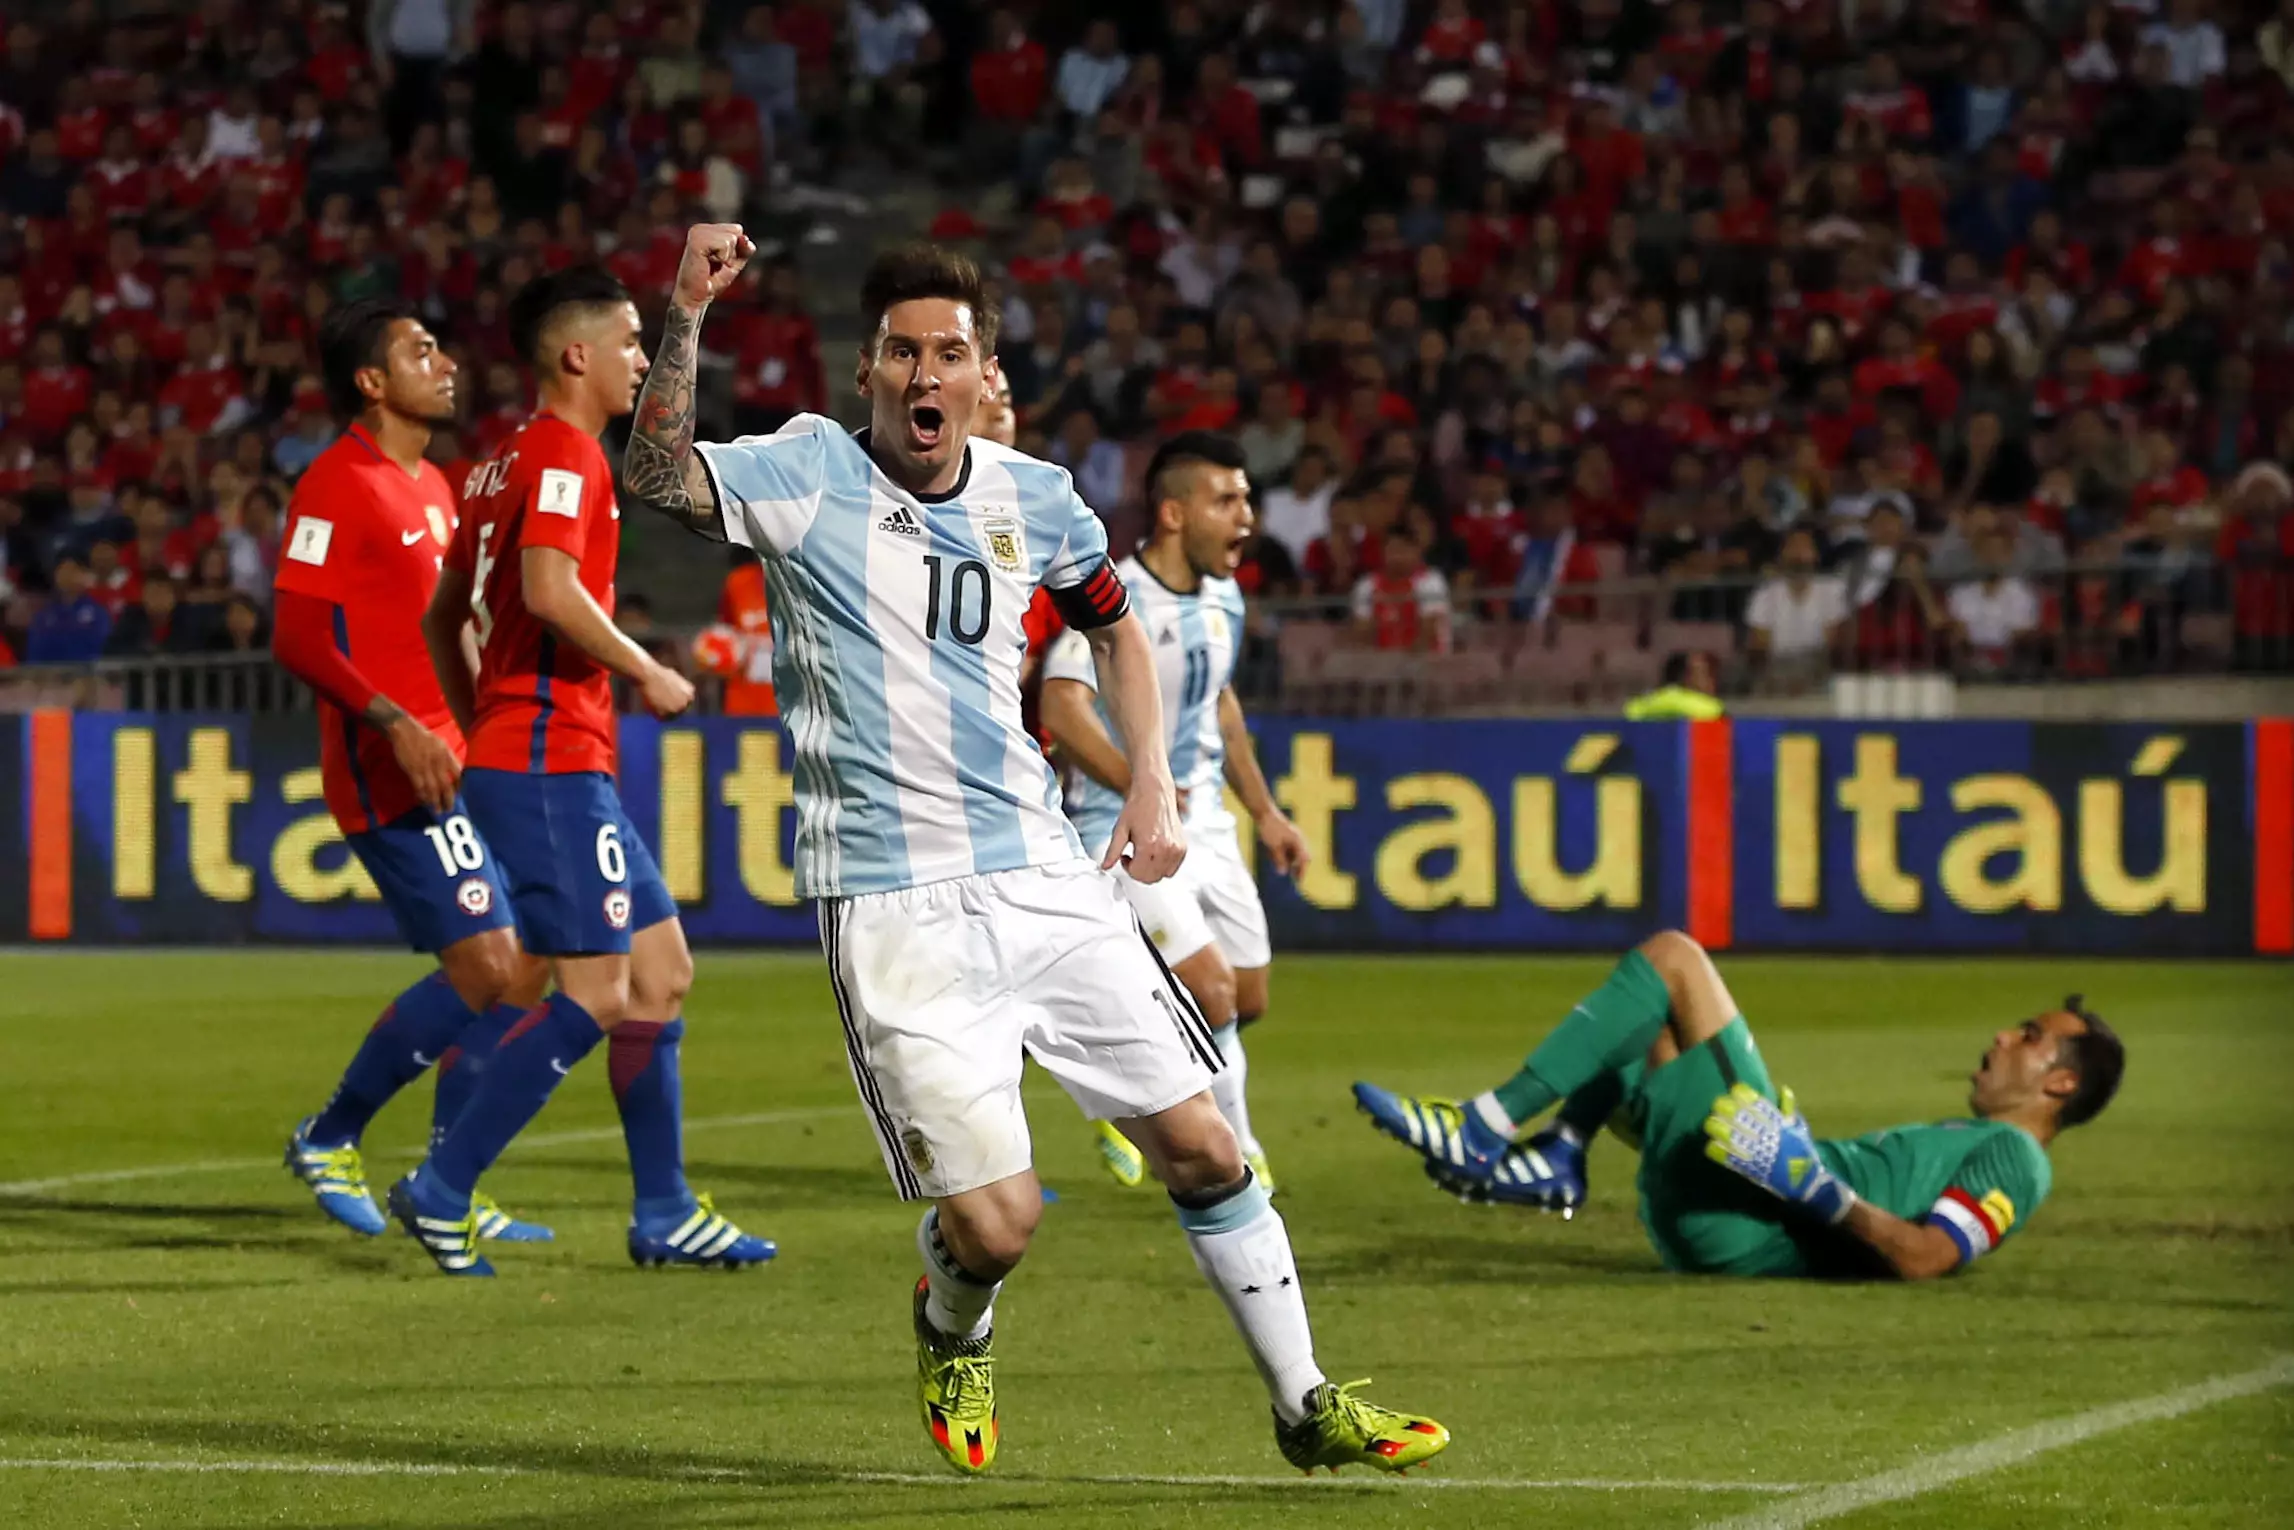 WATCH: Lionel Messi's Top 5 Goals For Argentina